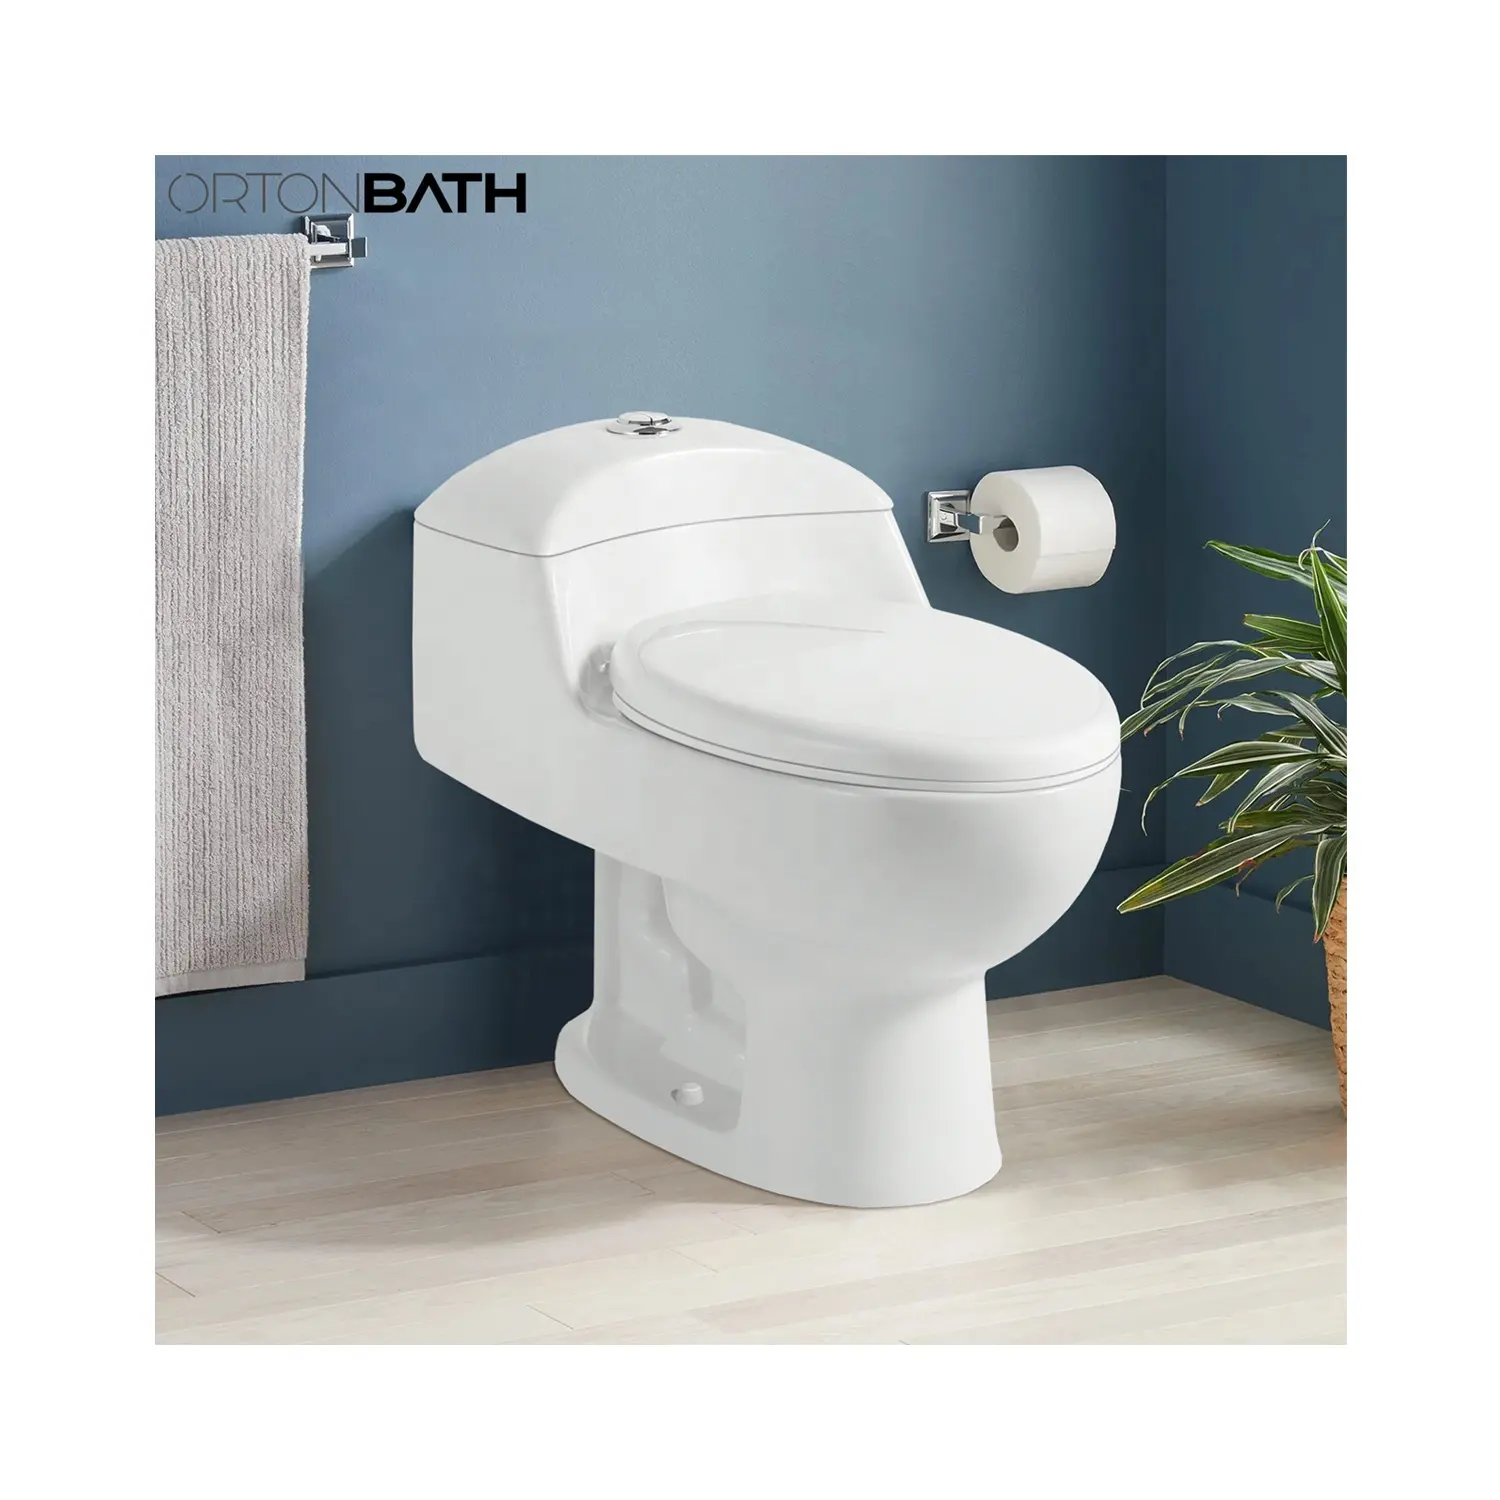 ORTONBATH 3/6L INODOROS Water Saving Latin America Double Flush Siphonic Design 300 Rough in One Piece Toilet